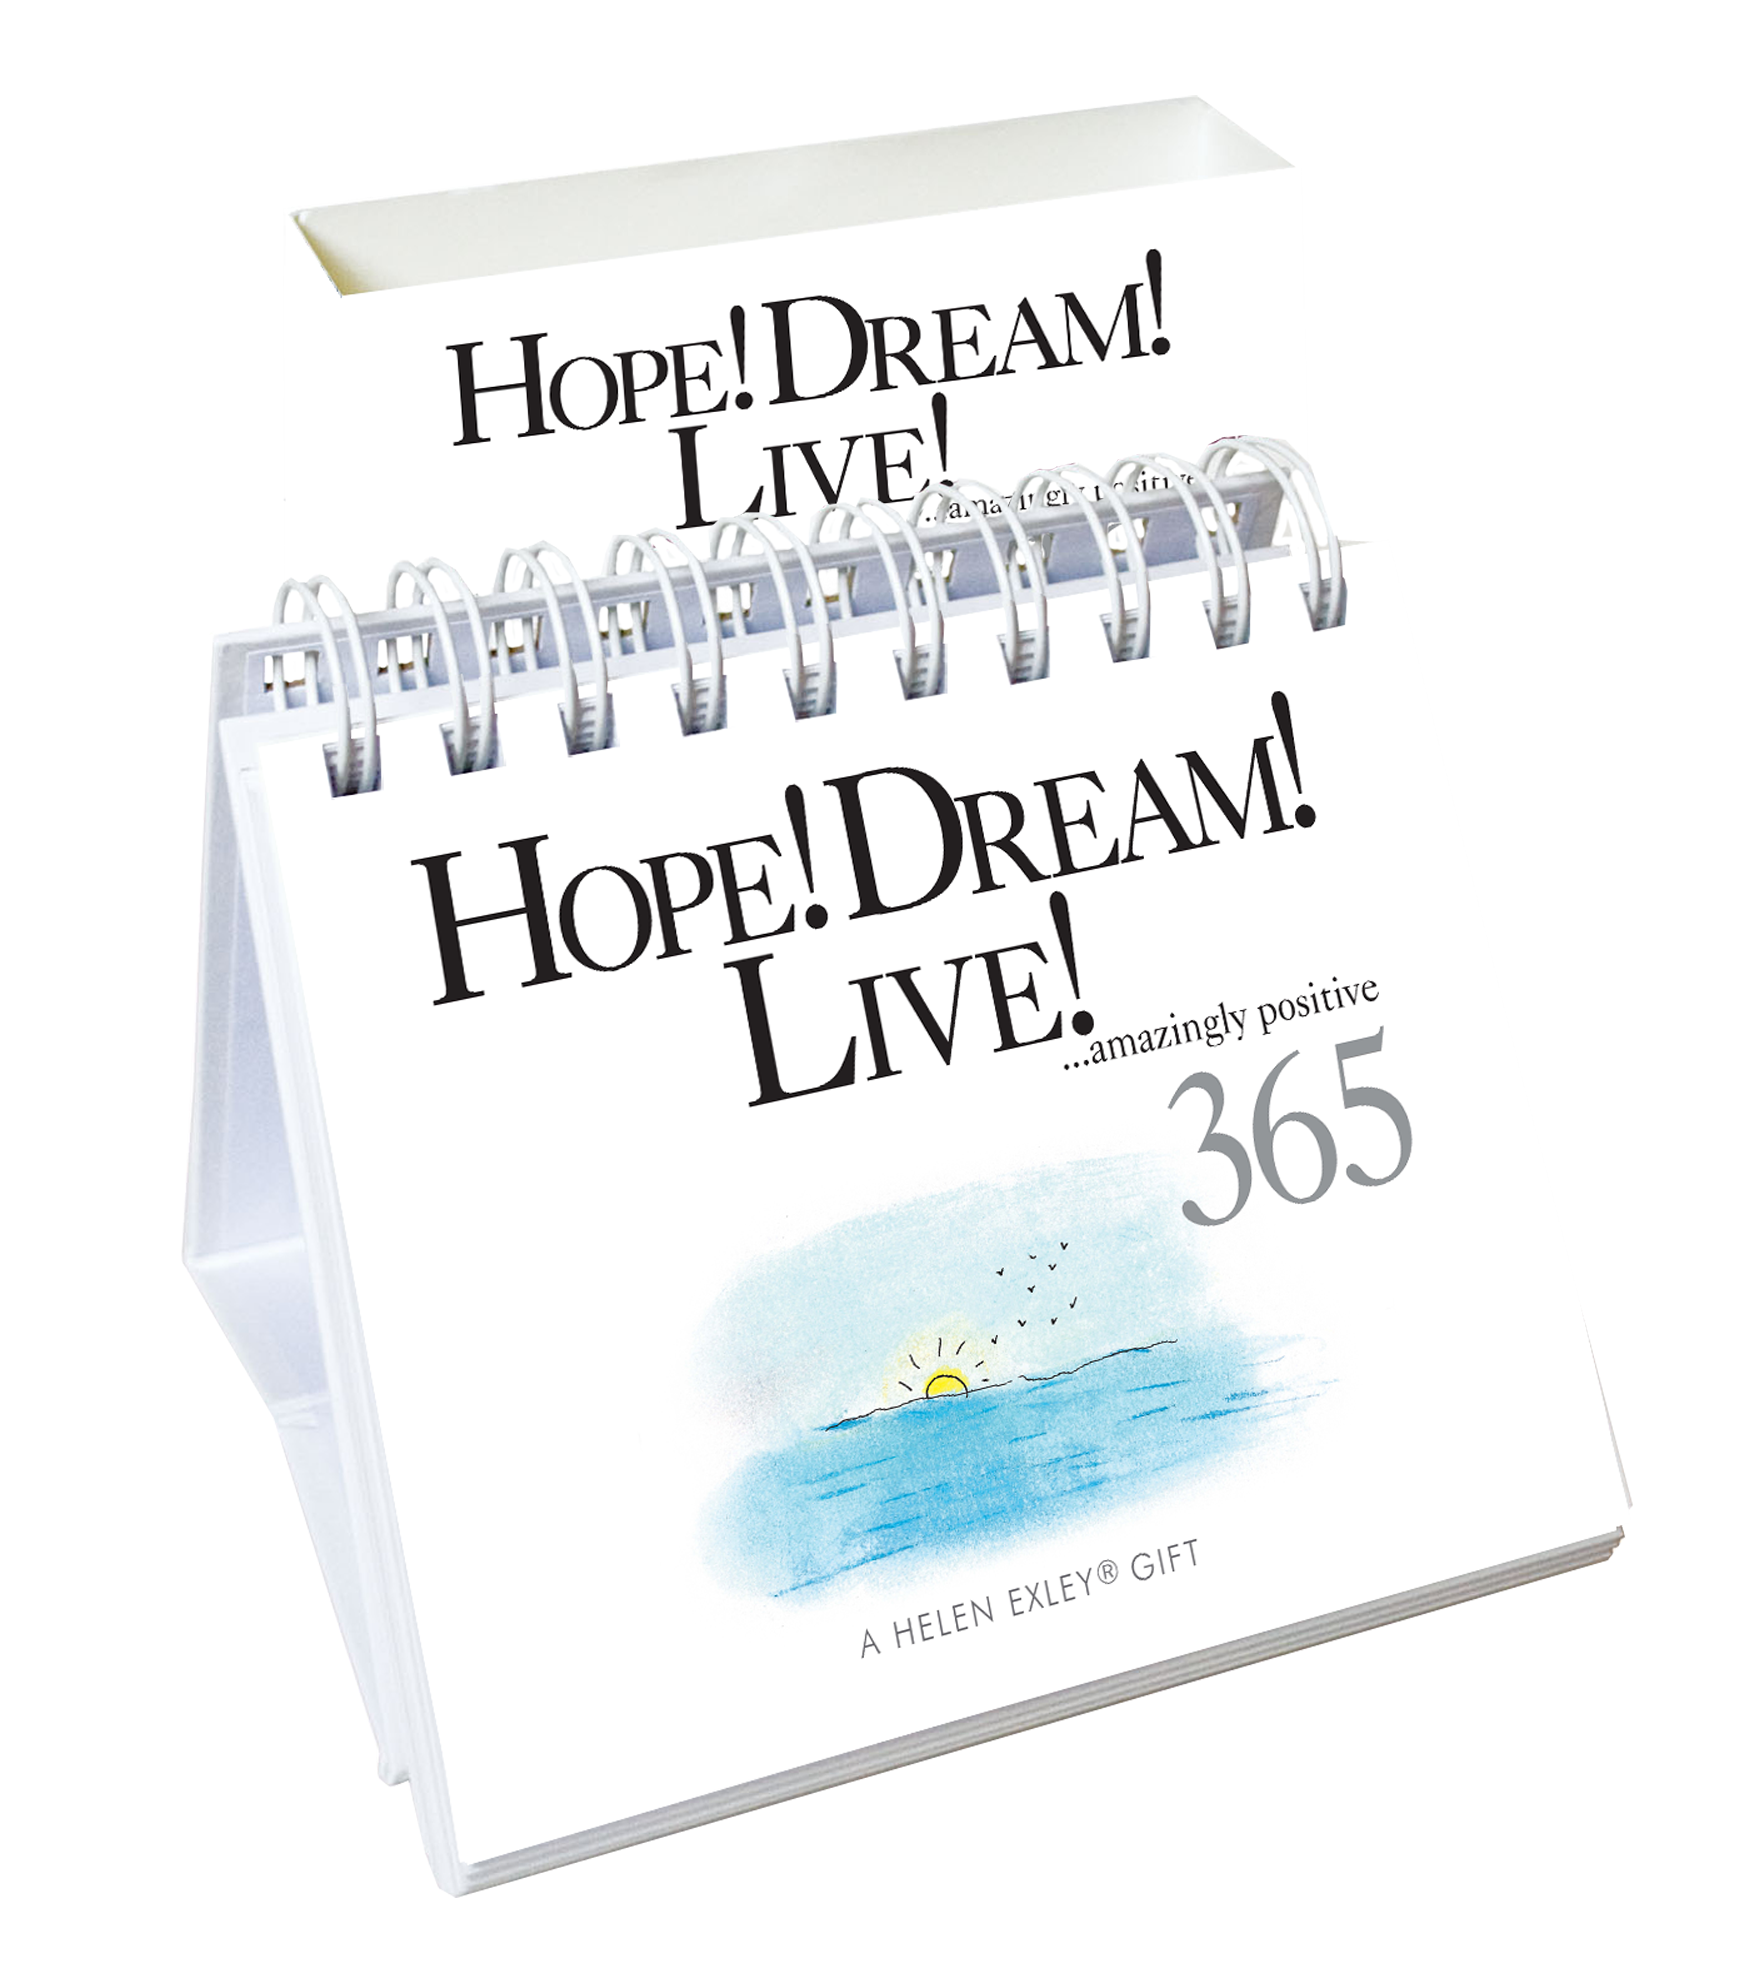 HE 365 Hope! Dream! Live!